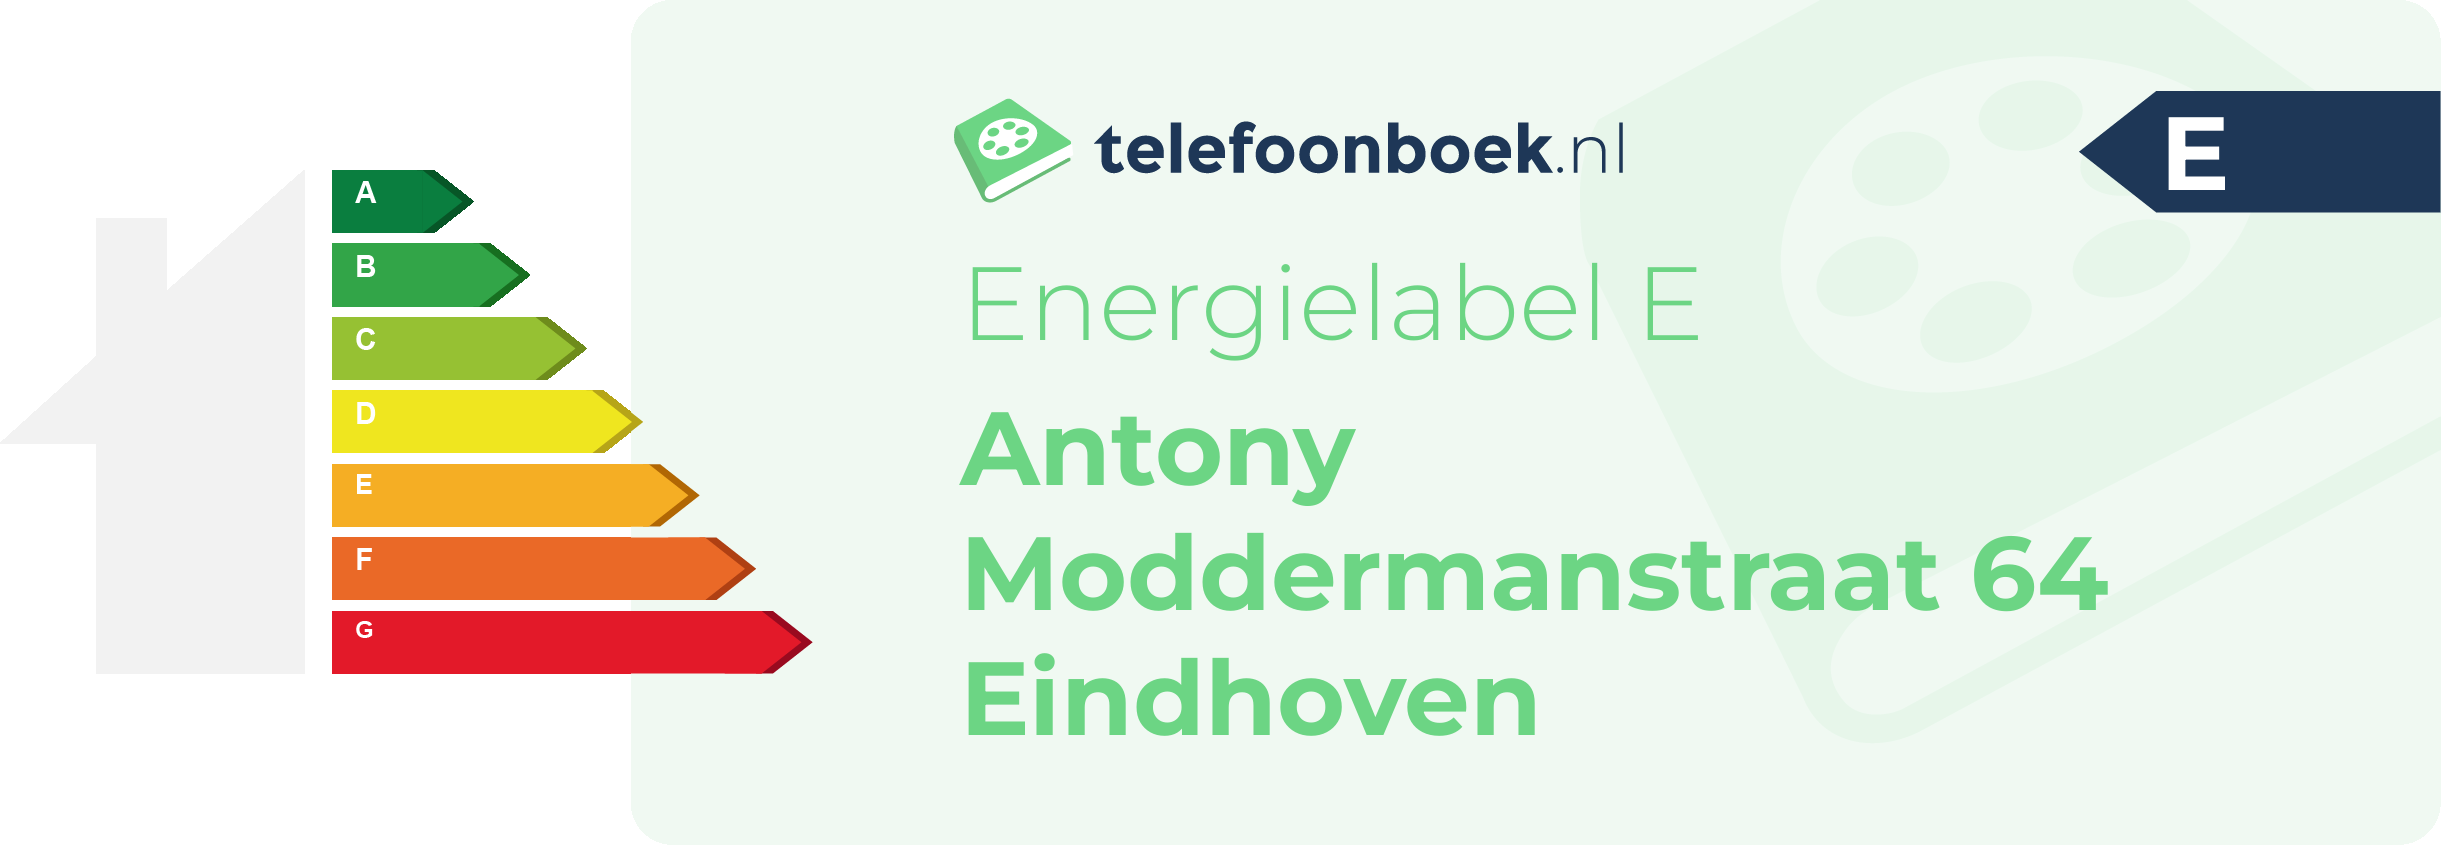 Energielabel Antony Moddermanstraat 64 Eindhoven